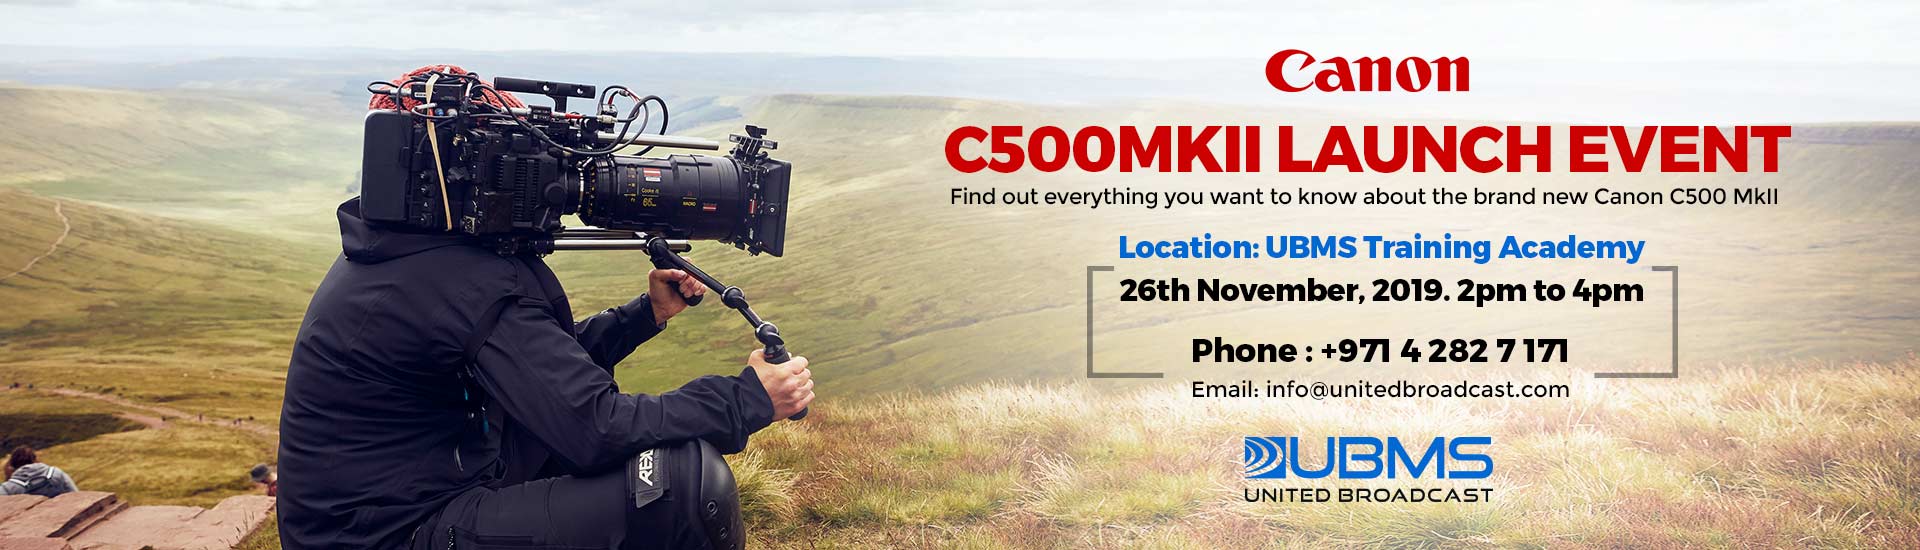 Canon C500MkII Launch Event